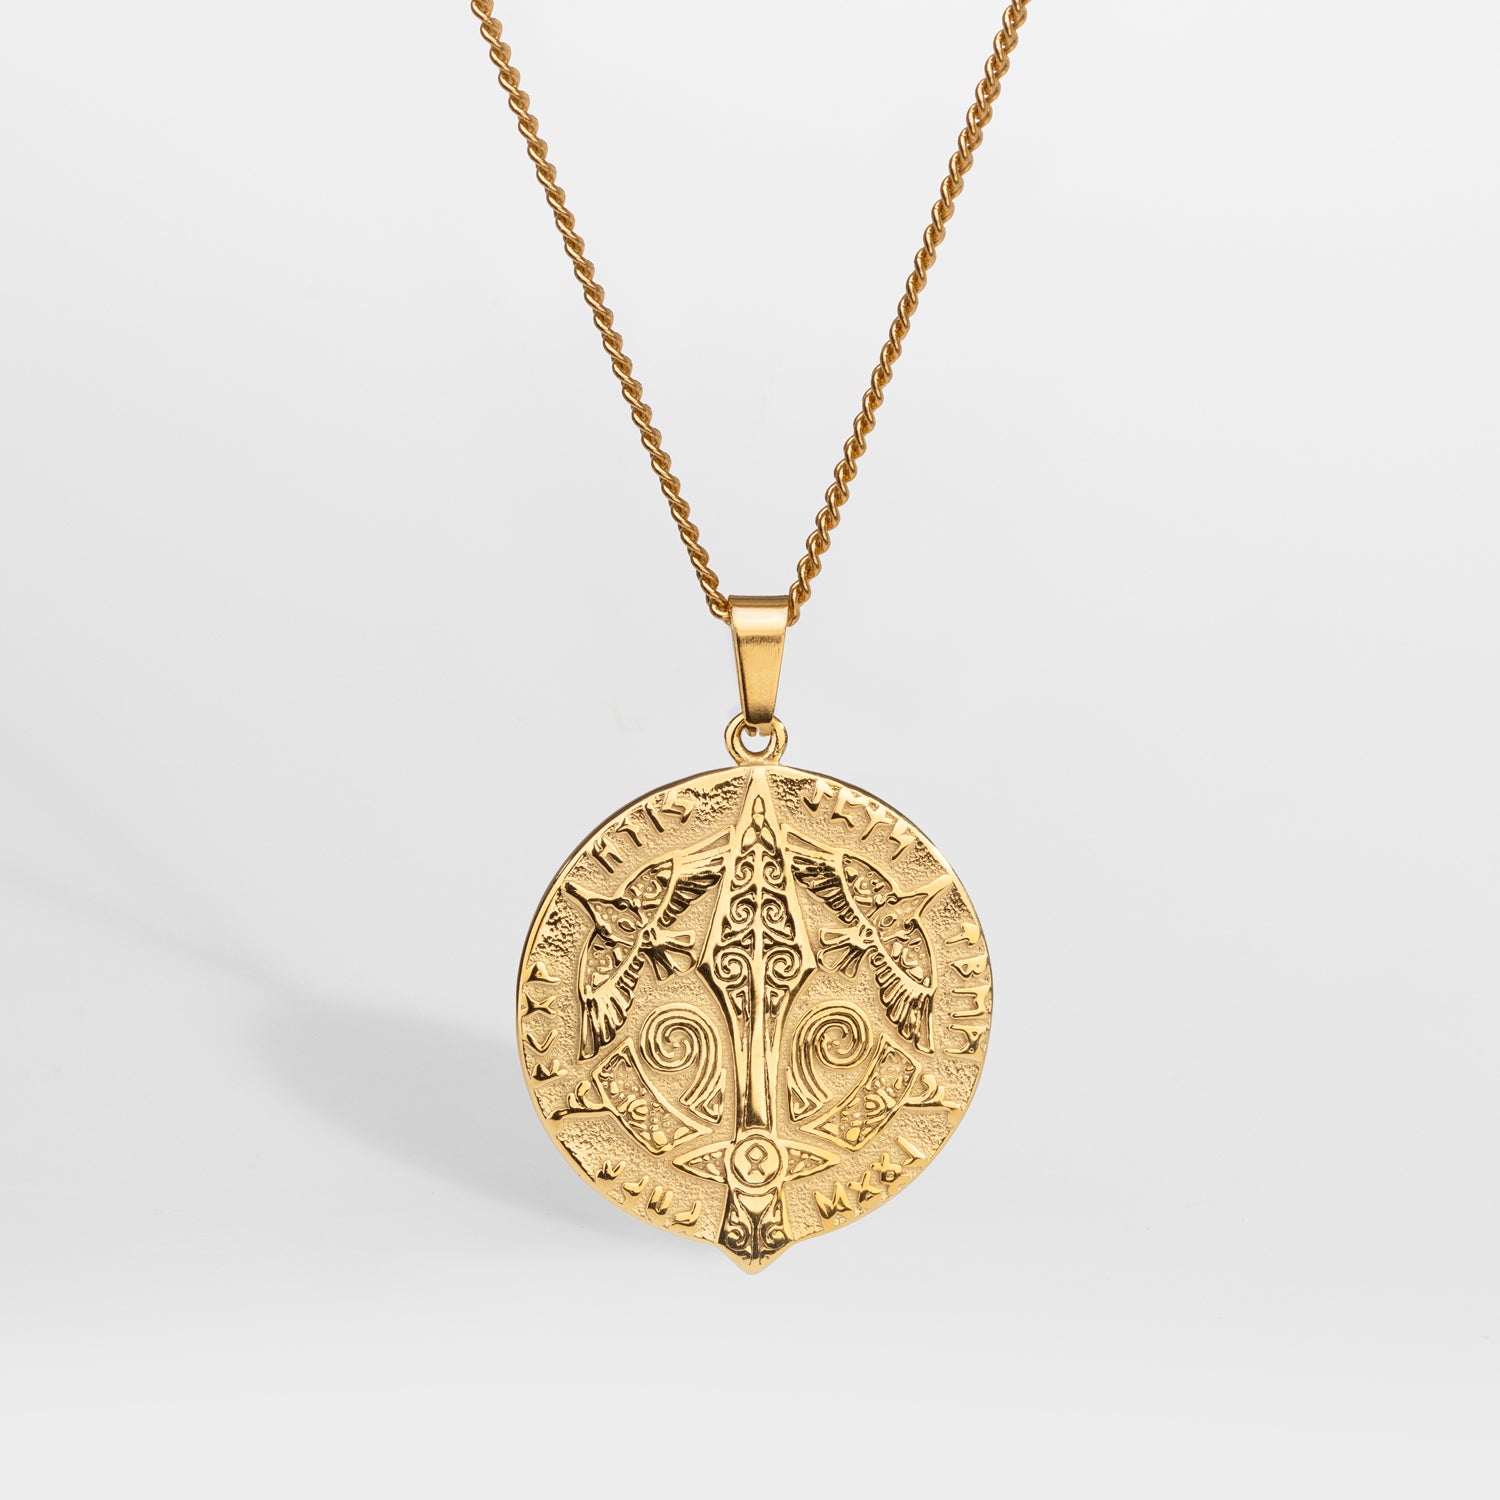 NL Gungnir necklace - Gold-toned